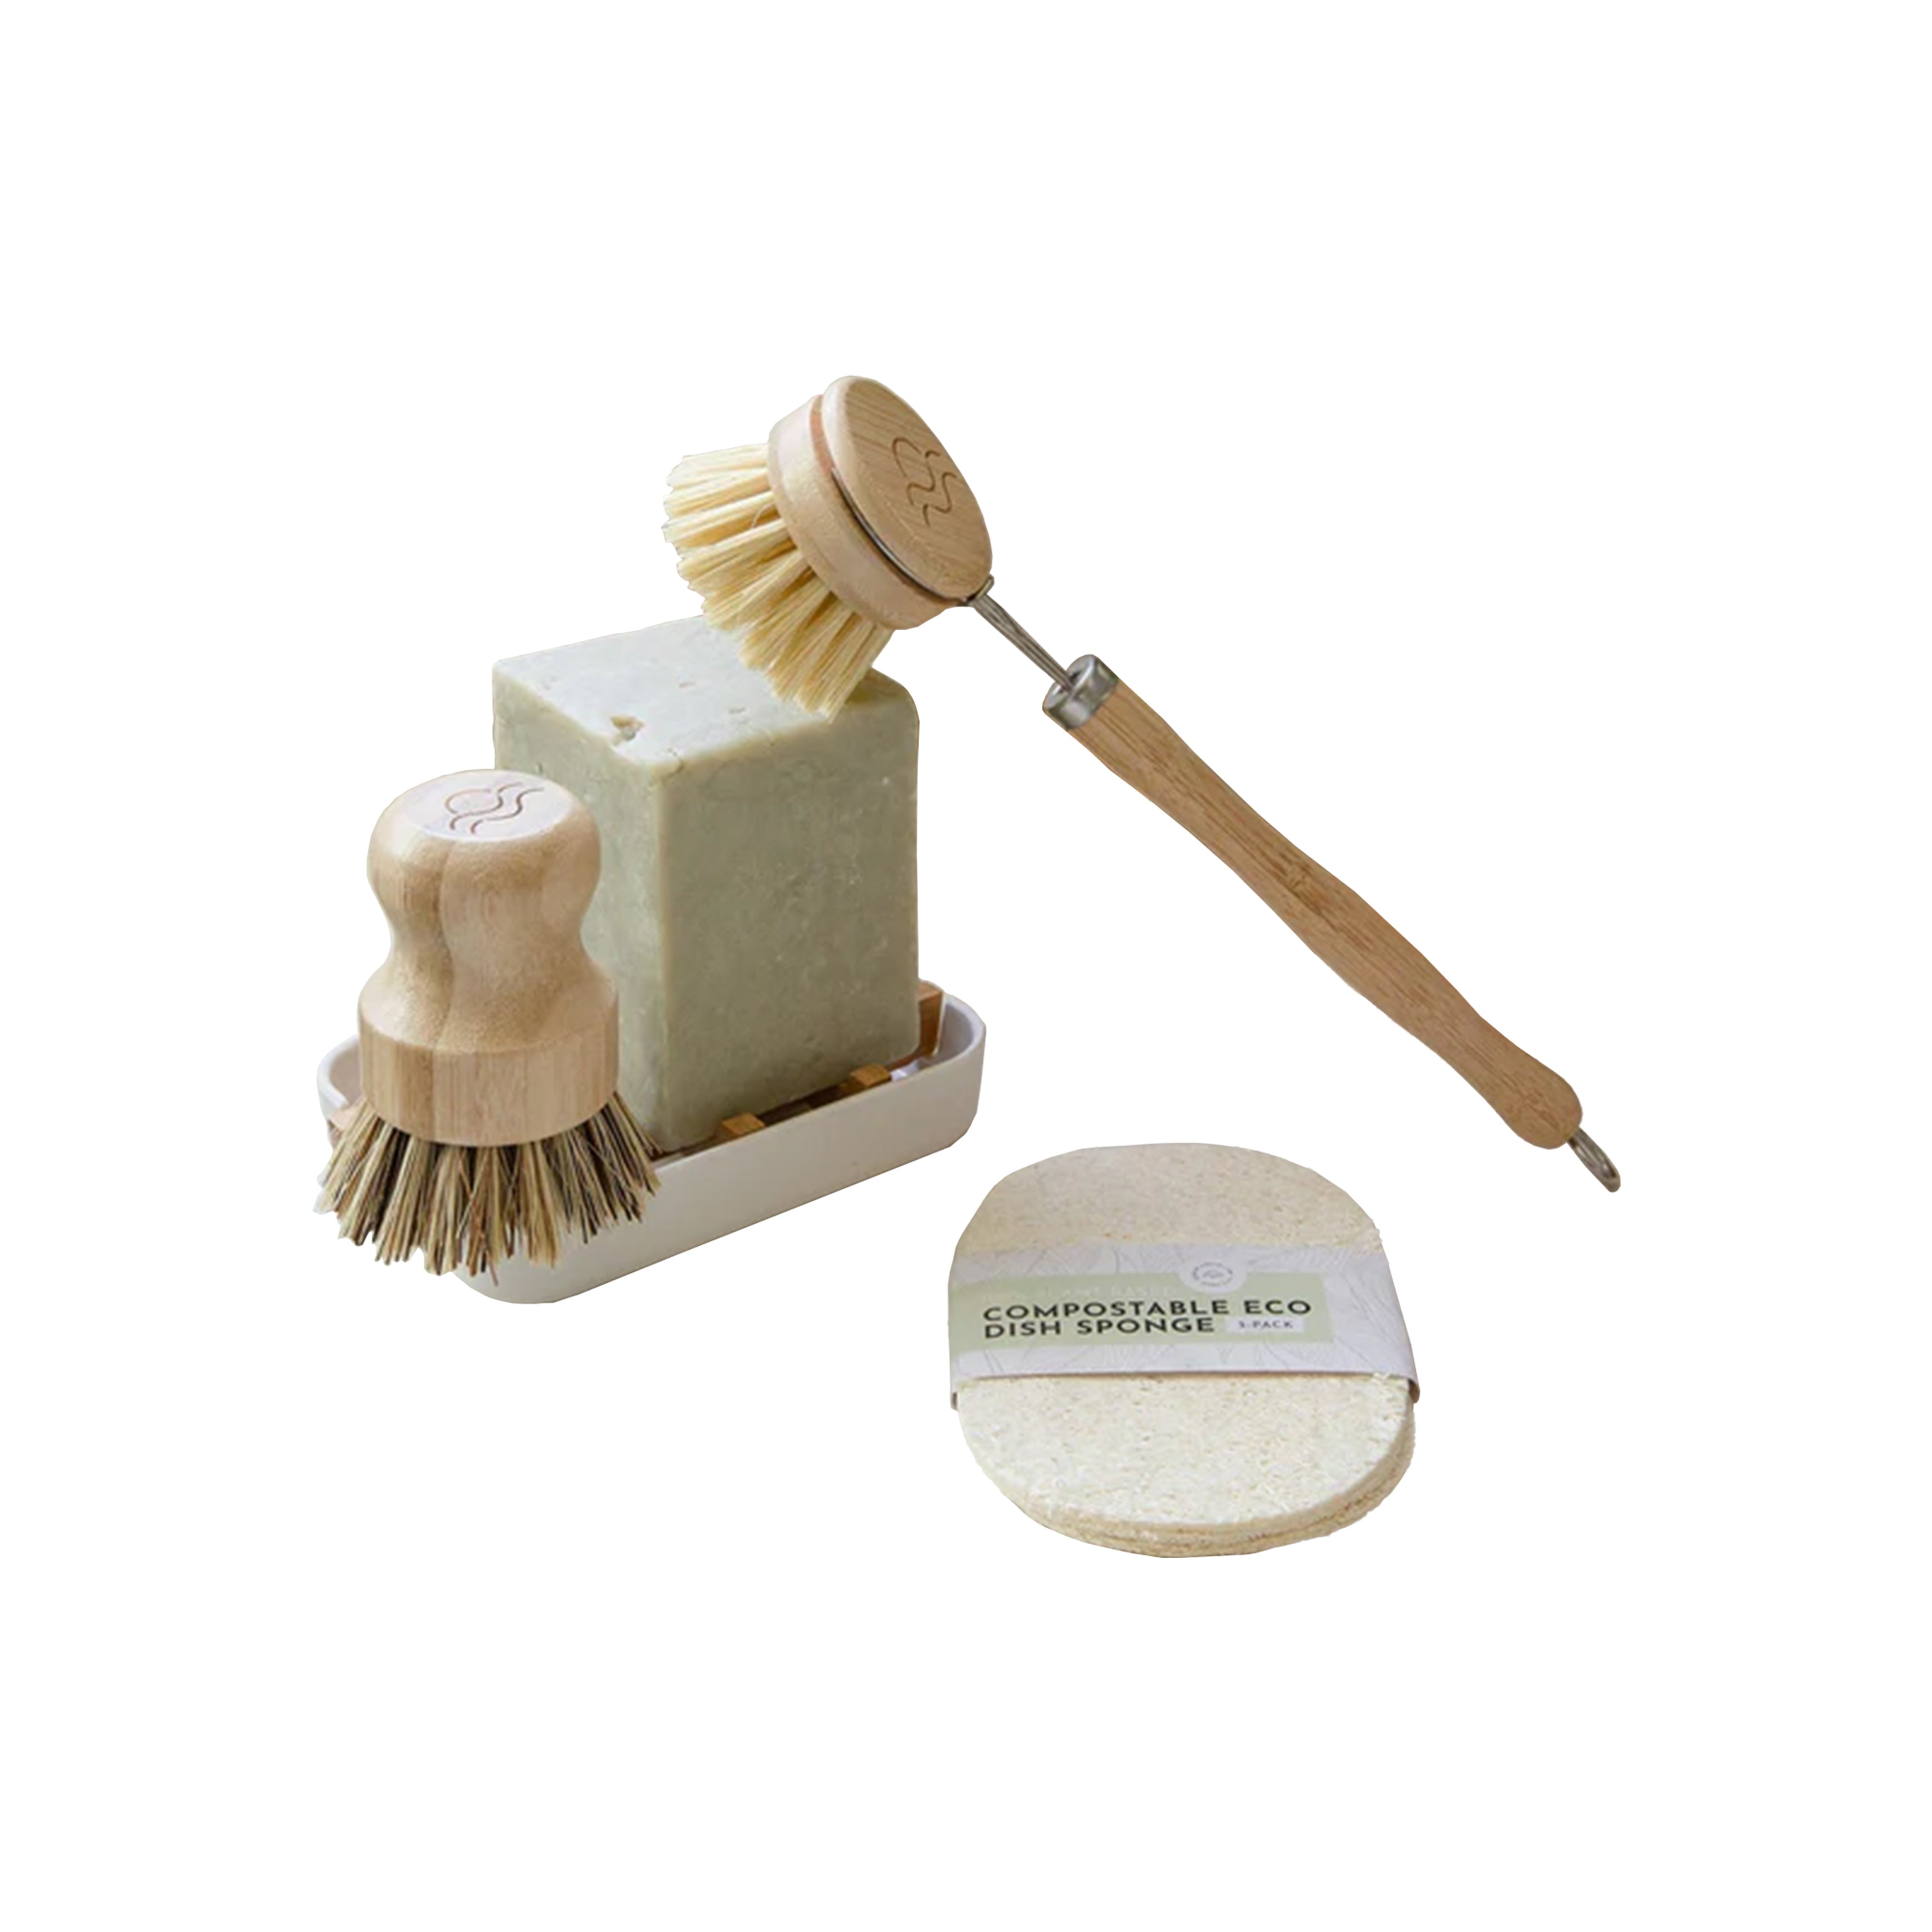 Eco Friendly Kitchen Bundle: Solid Dish Soap, Biodegradable Soap Dish, Sisal Cleaning Brush, Pot Scrubber, Eco Dish Sponge 3-Pack